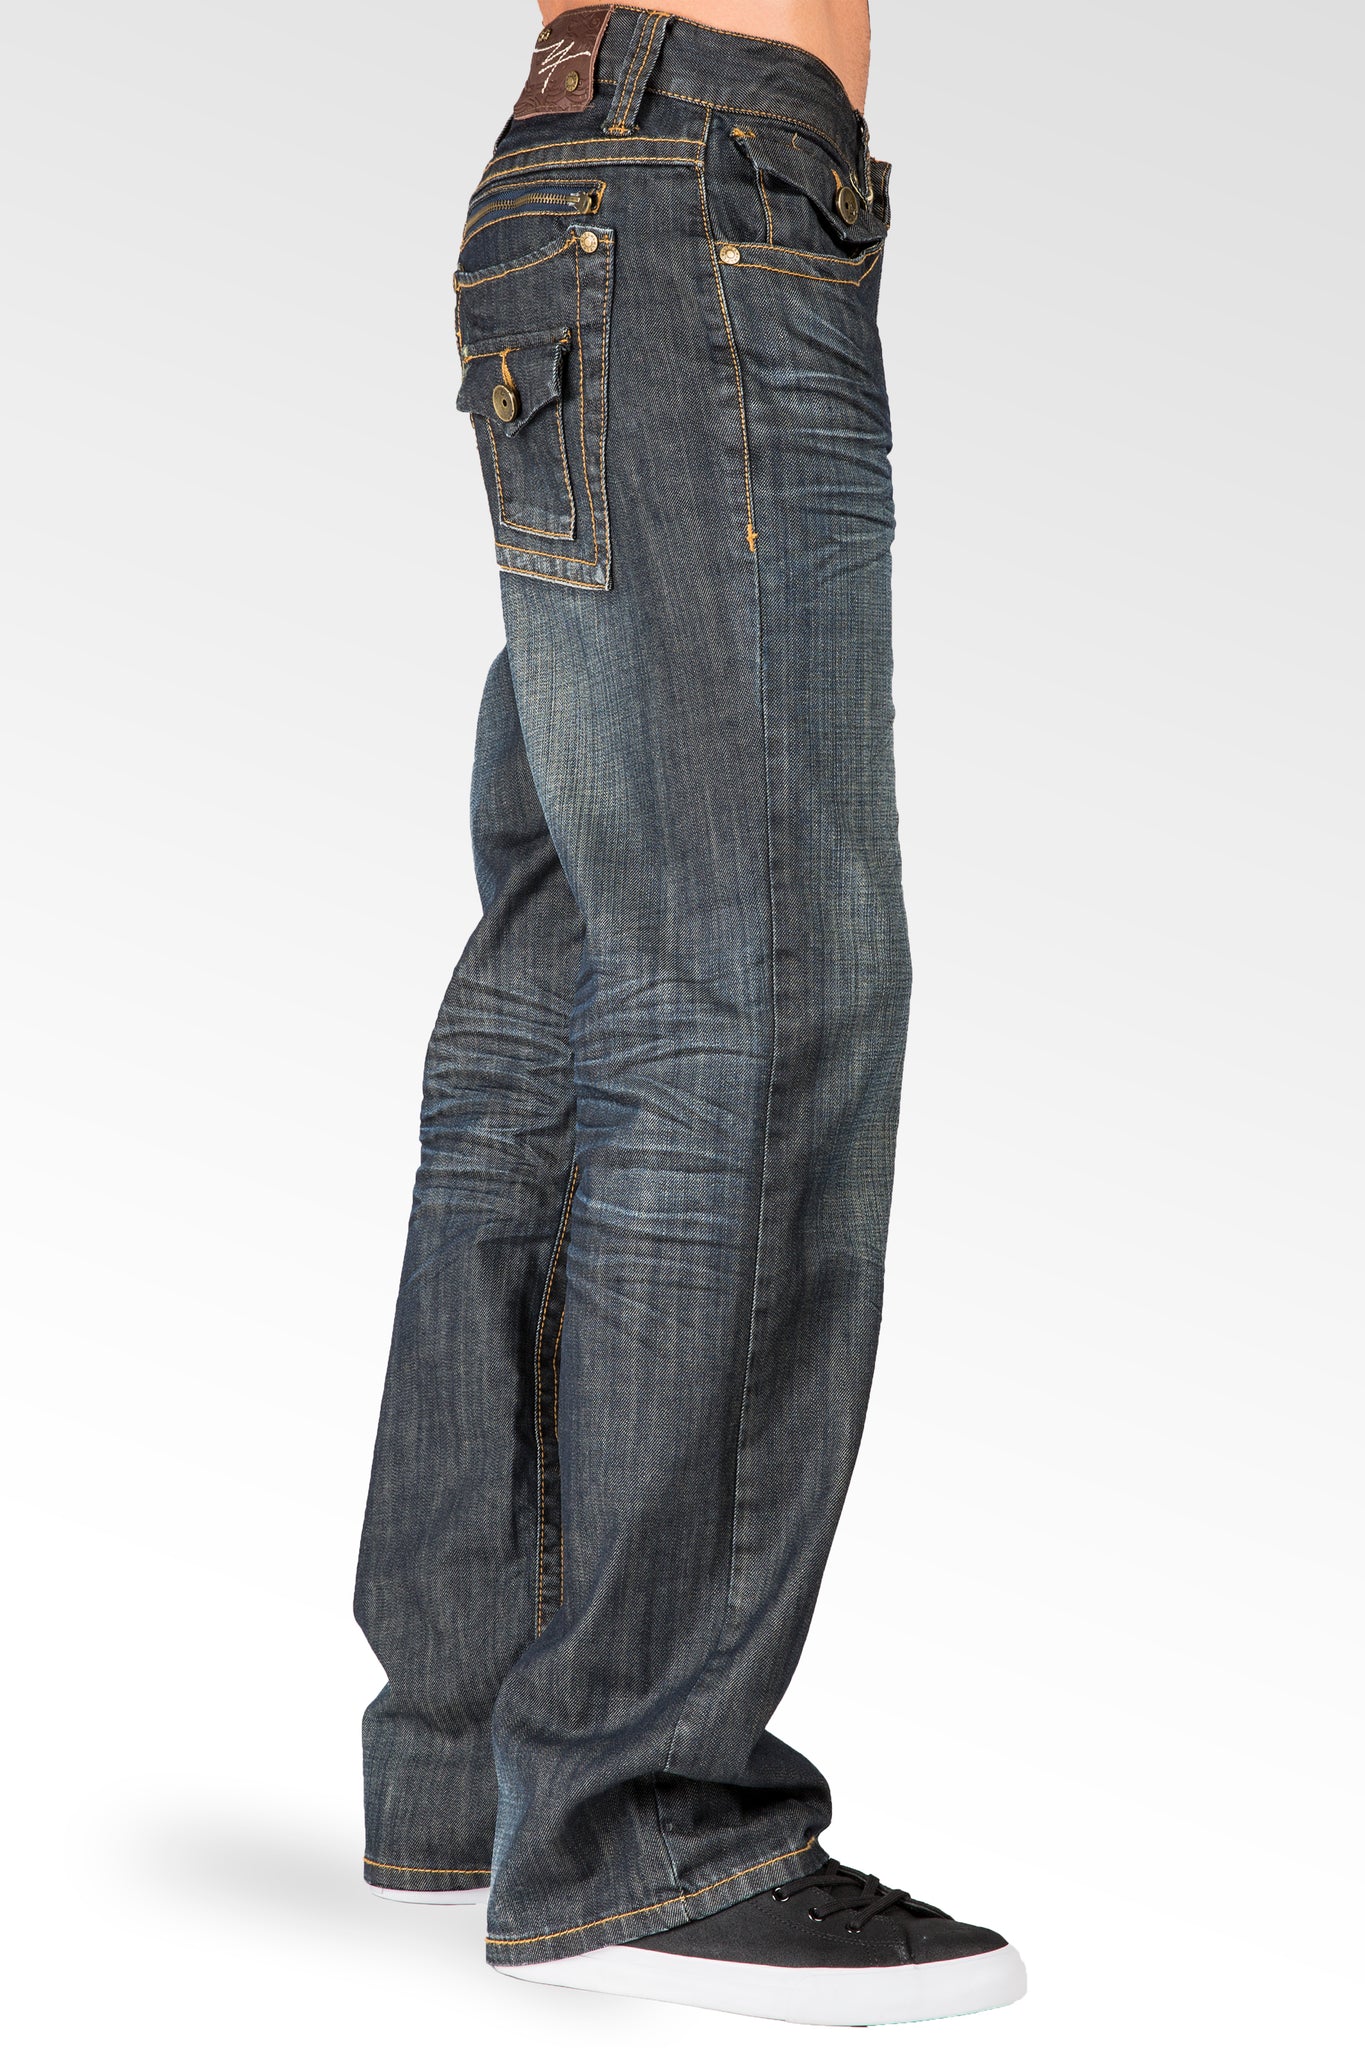 Men's Relaxed Bootcut Dark Vintage Premium Denim Jean Zipper Back Pockets